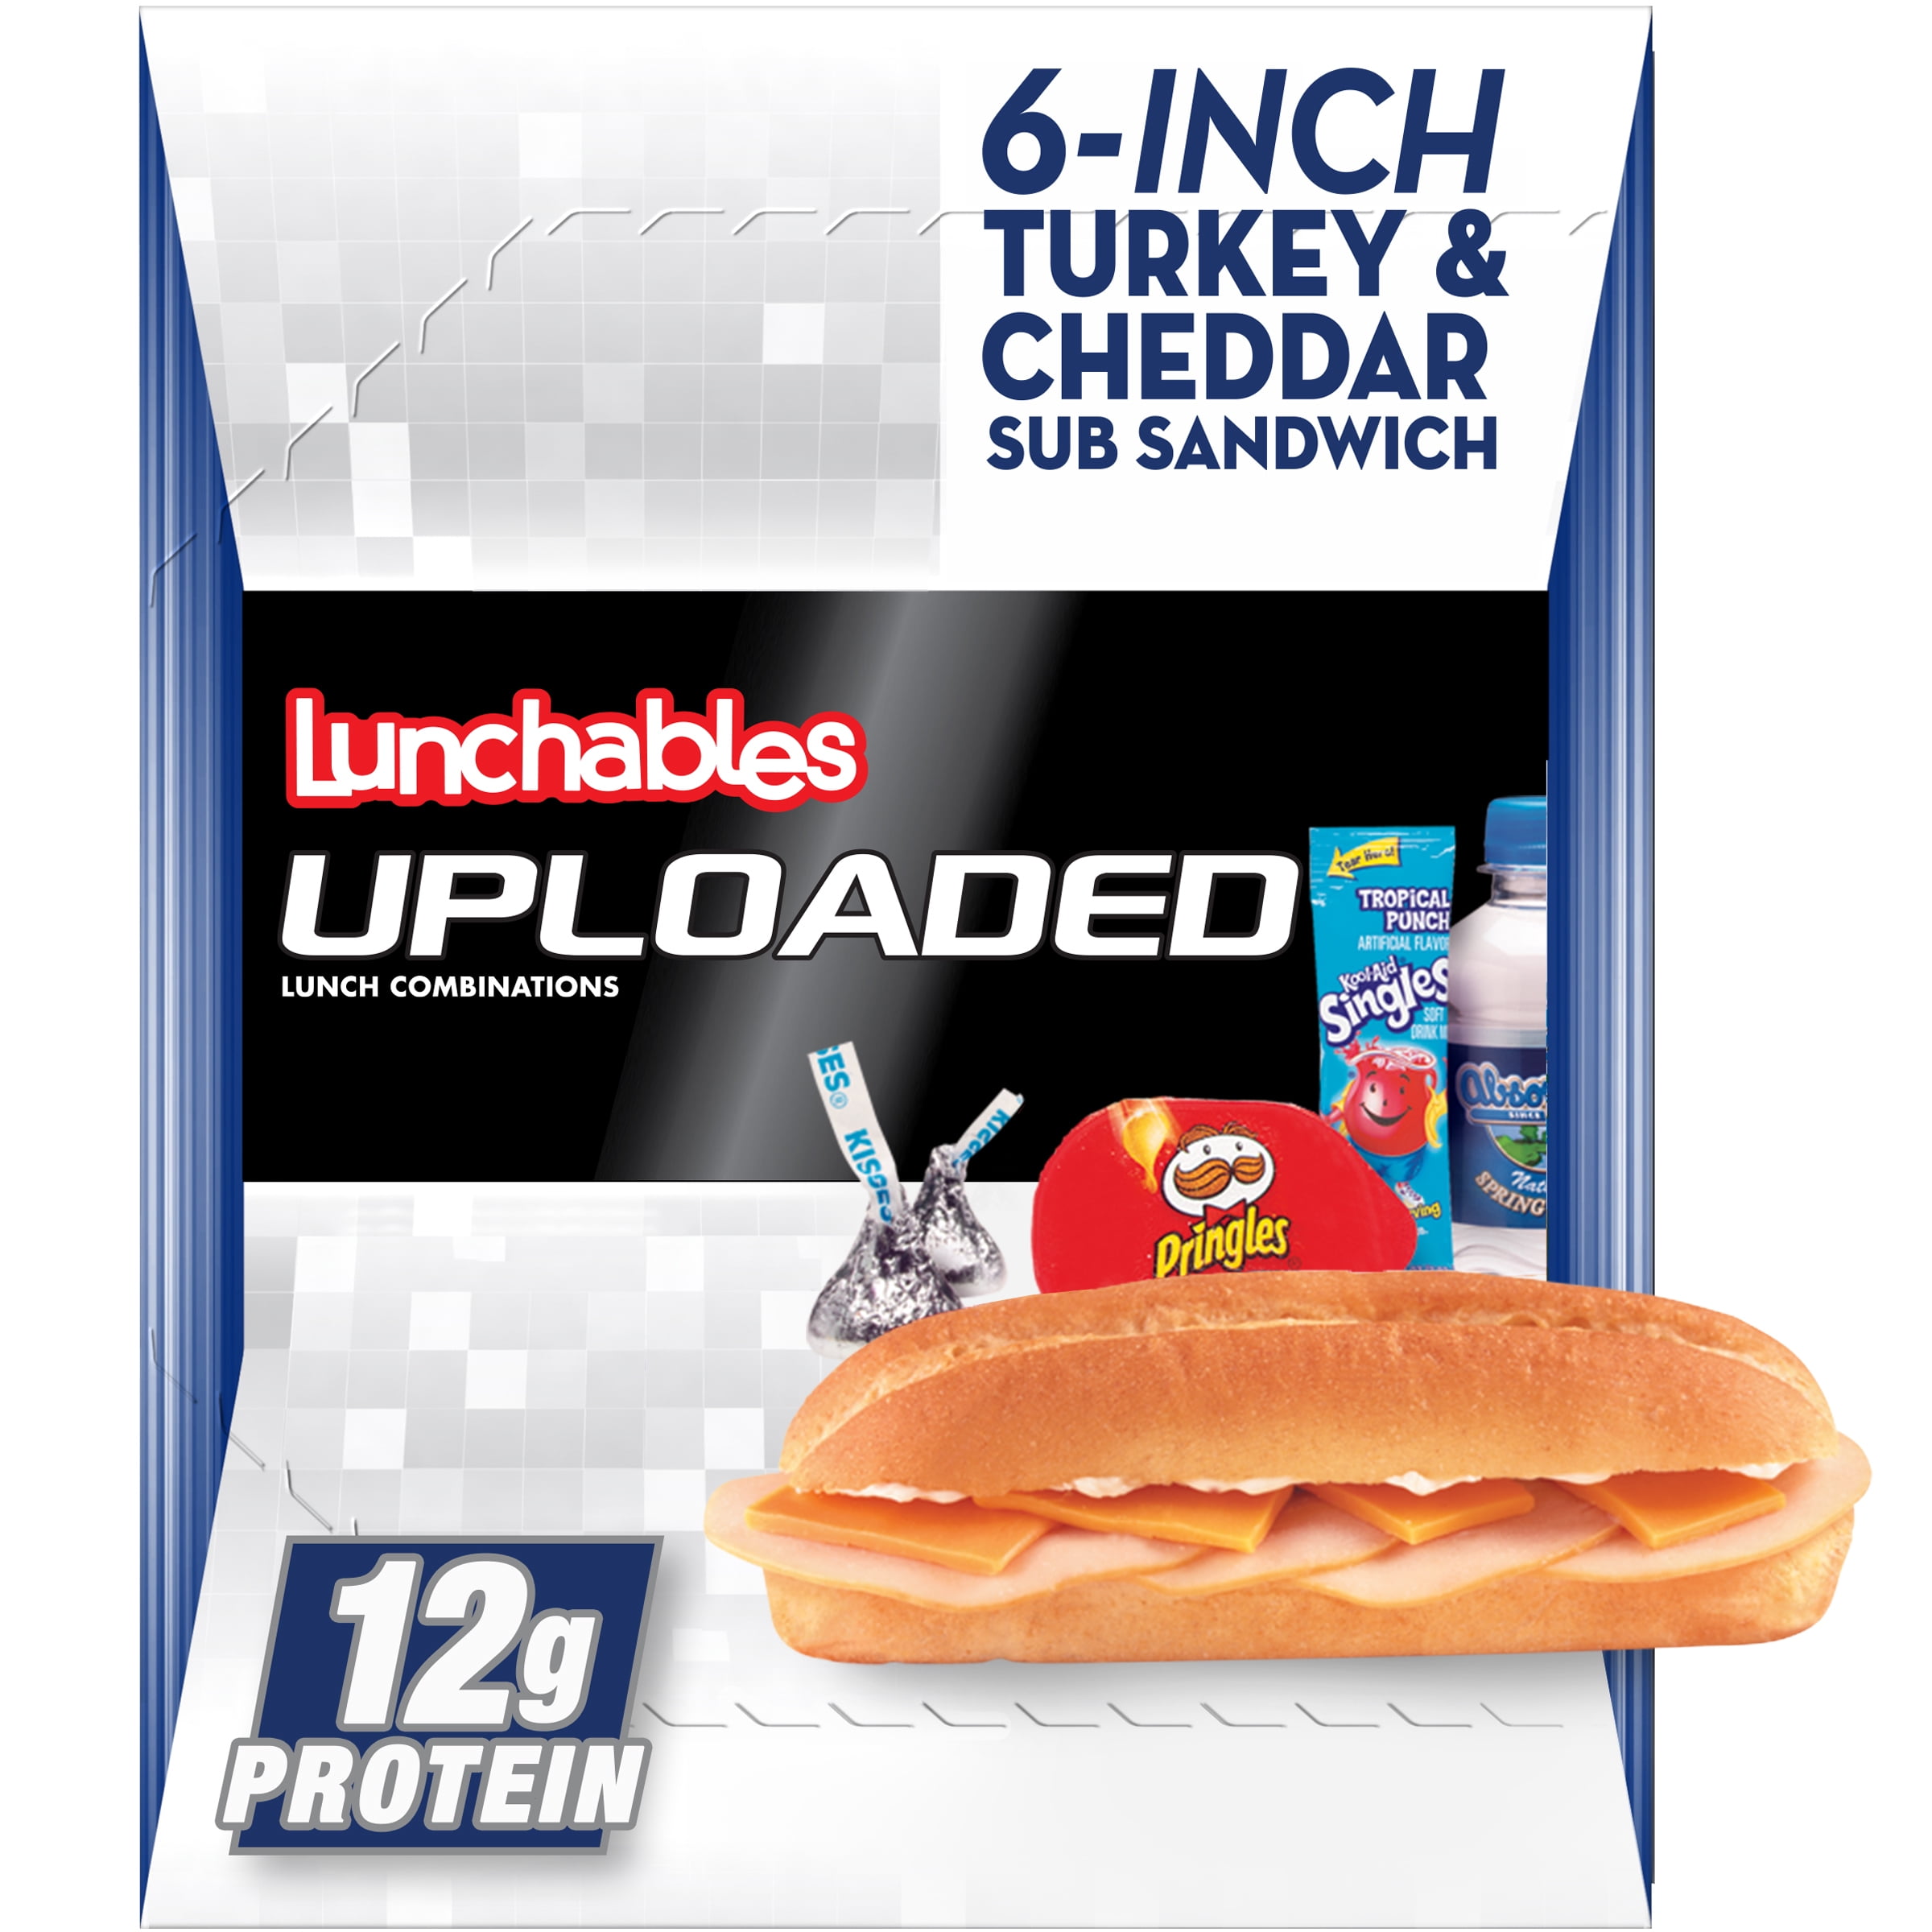 Lunchables Uploaded With Turkey And Cheddar Sub Sandwich 15 Oz Box